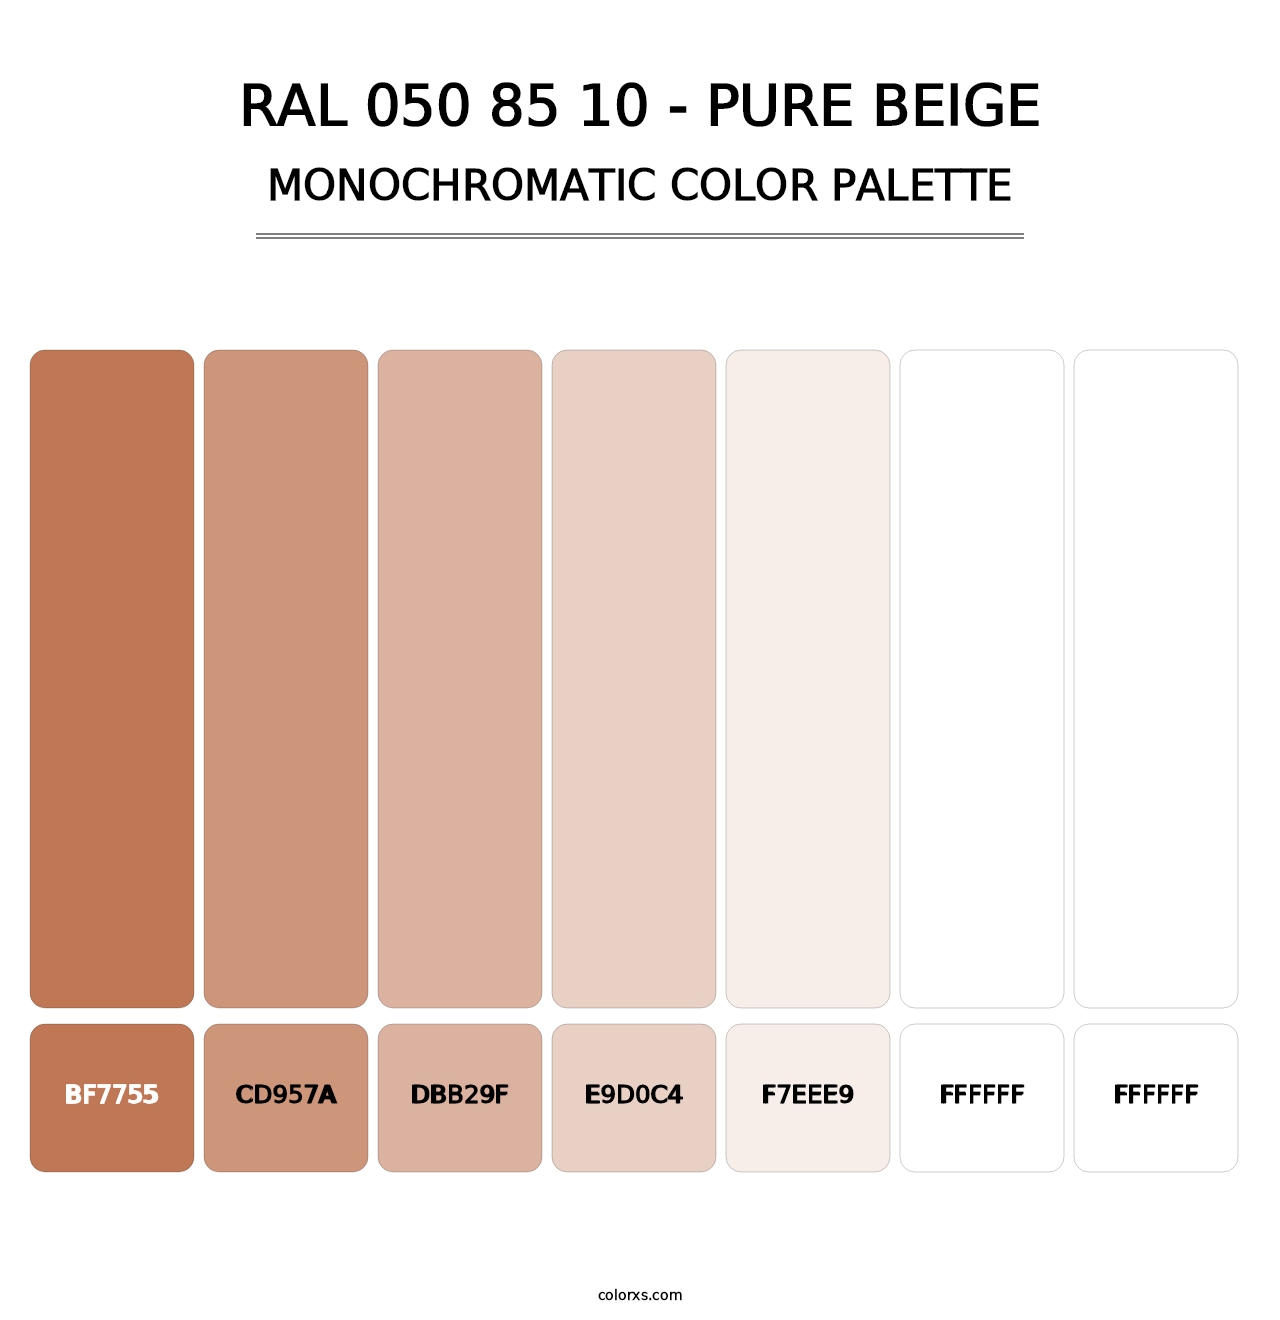 RAL 050 85 10 - Pure Beige - Monochromatic Color Palette